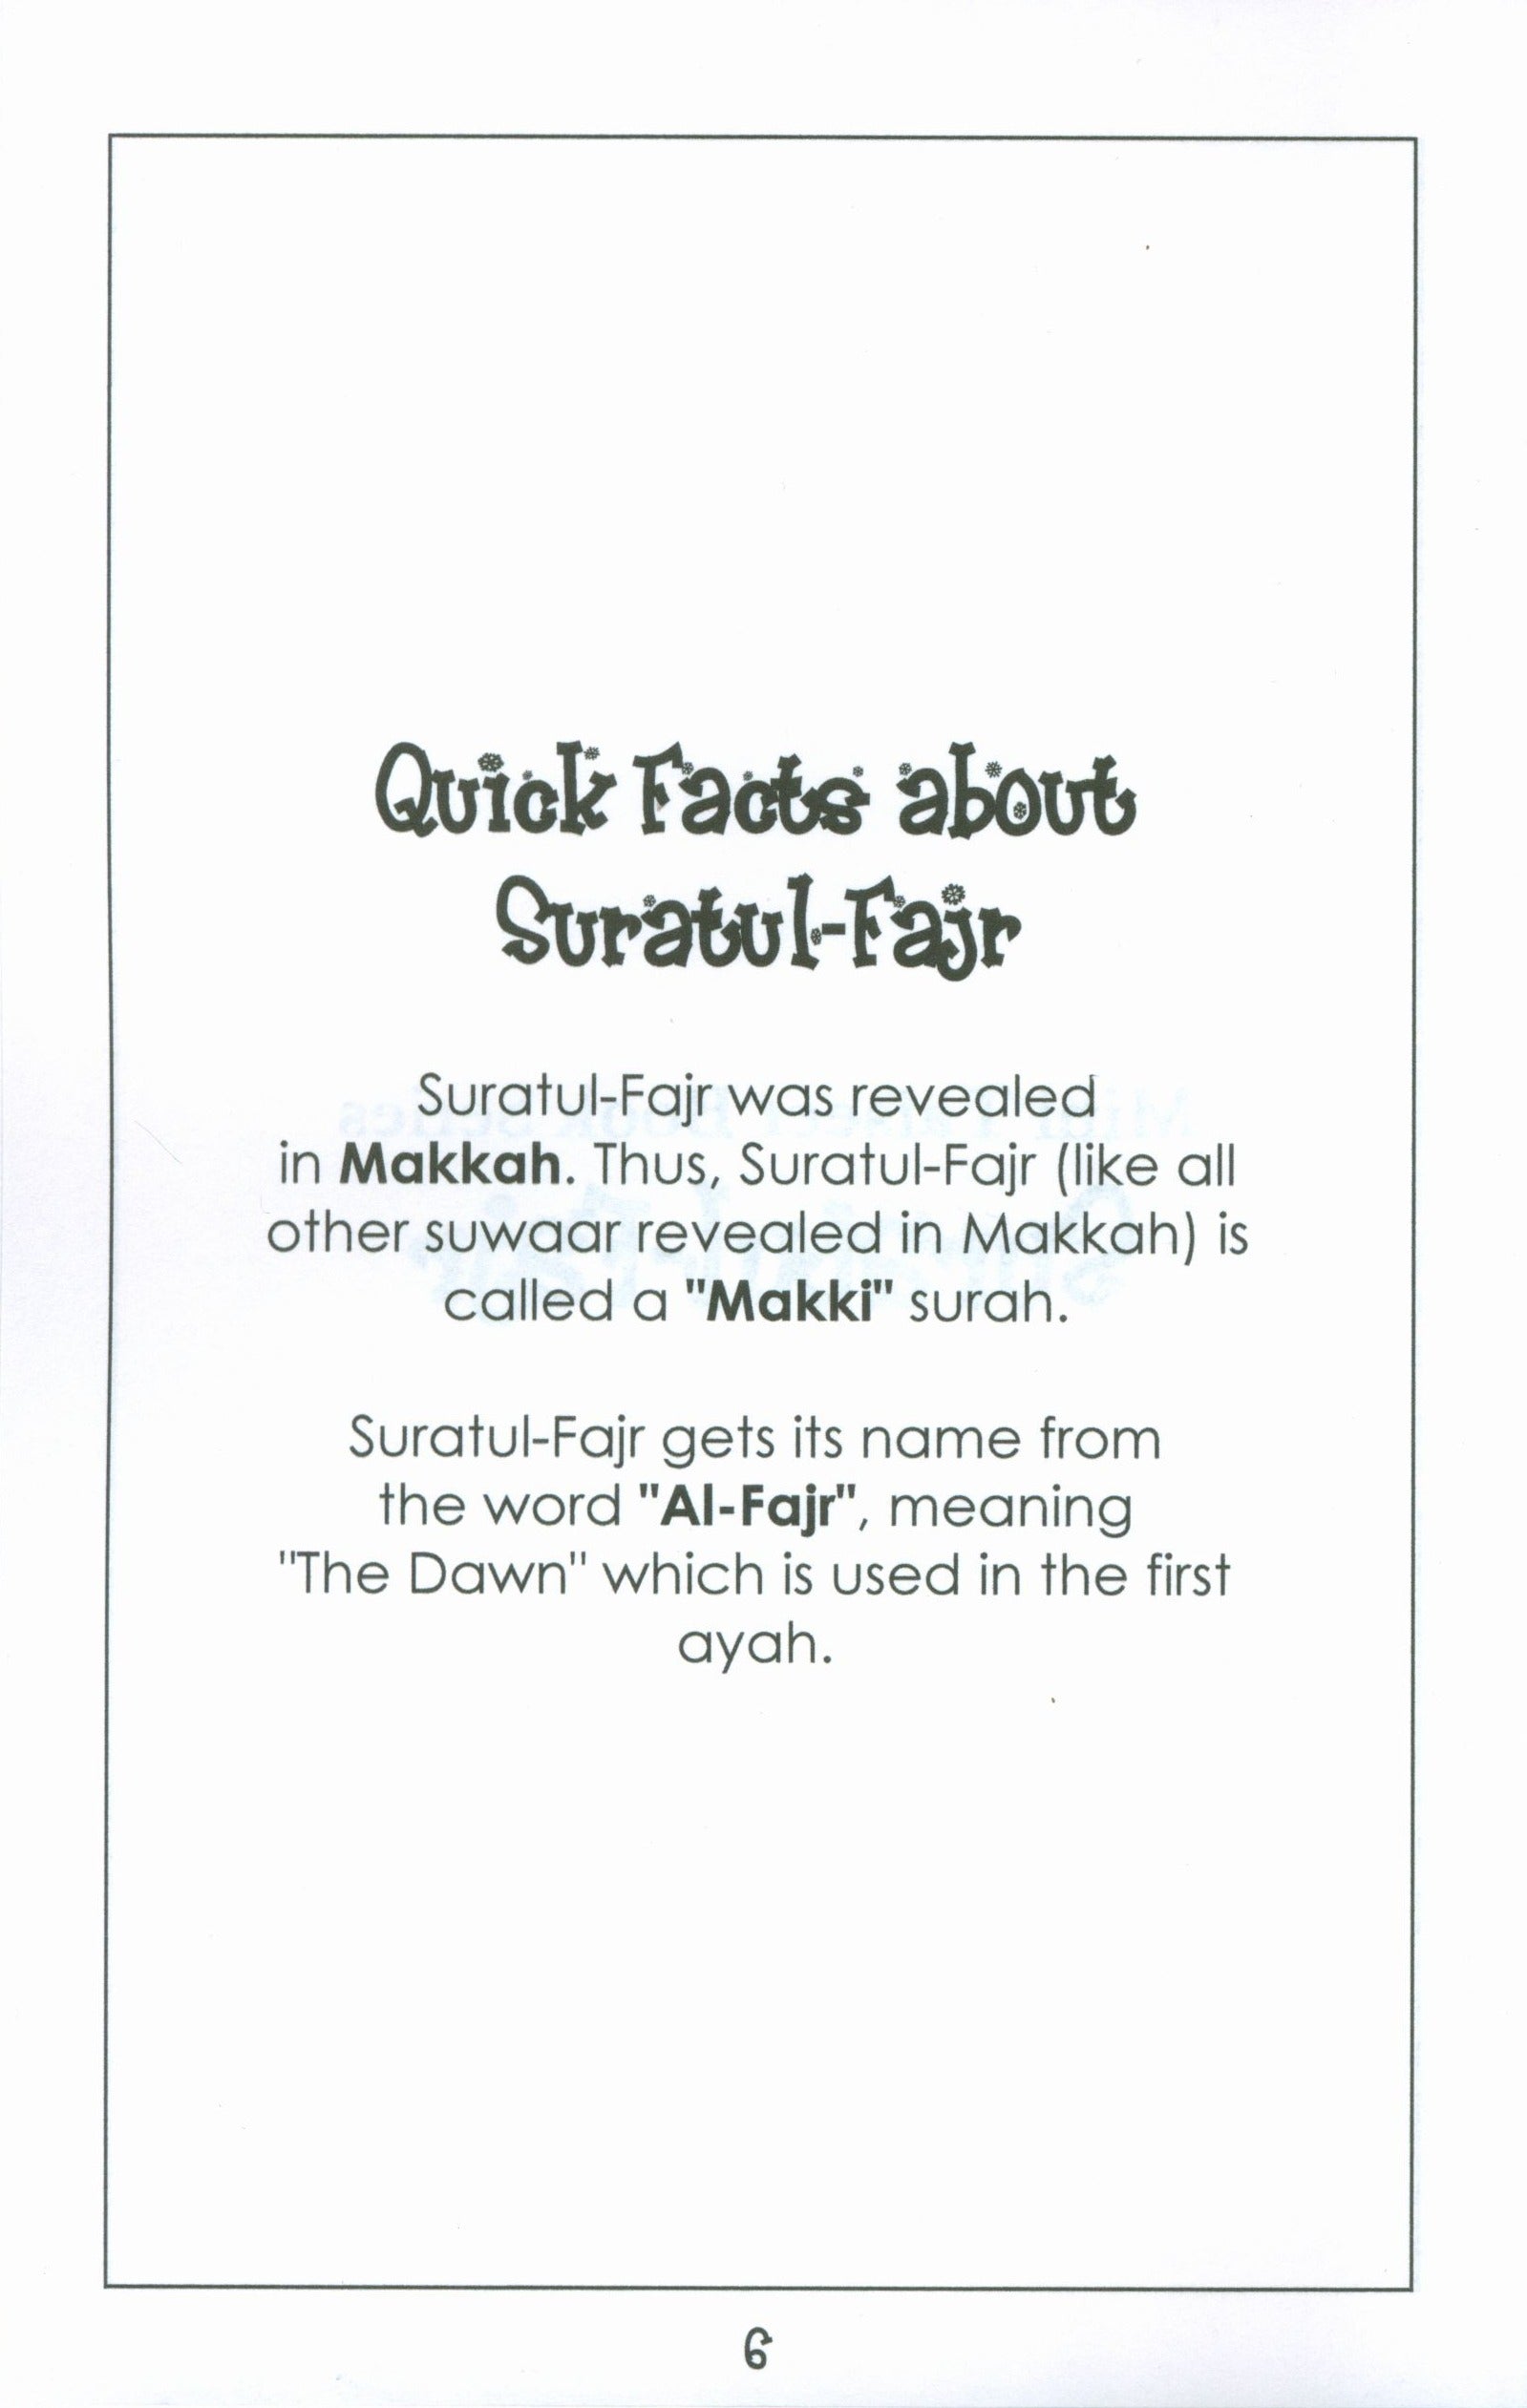 Mini Tafseer Book Suratul Fajr (Surah 89)